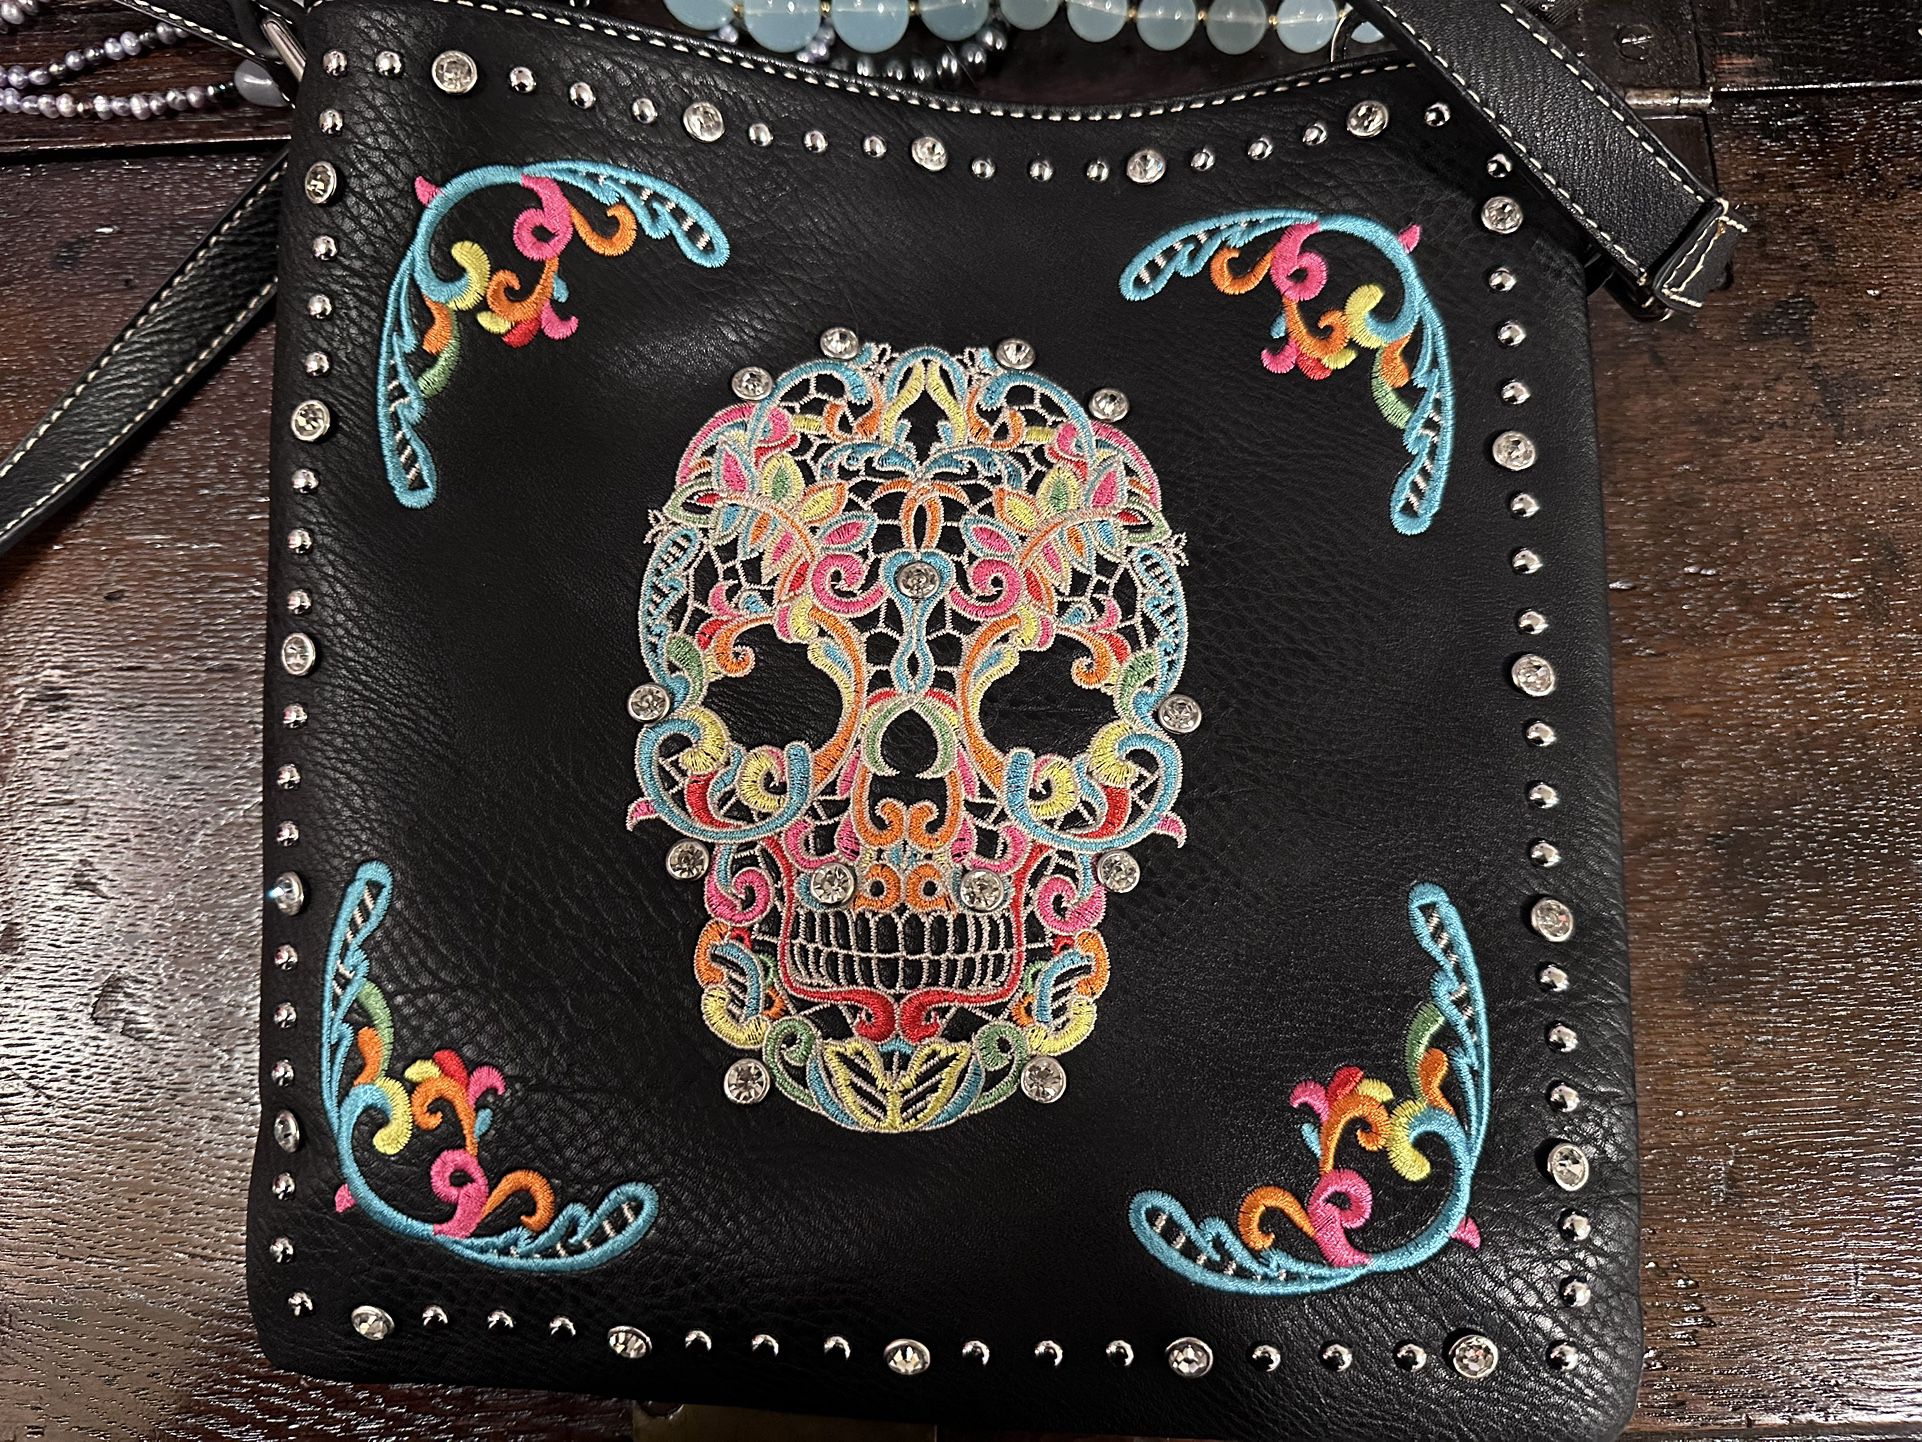 Montana West Women’s Embroidered Shoulder Bag